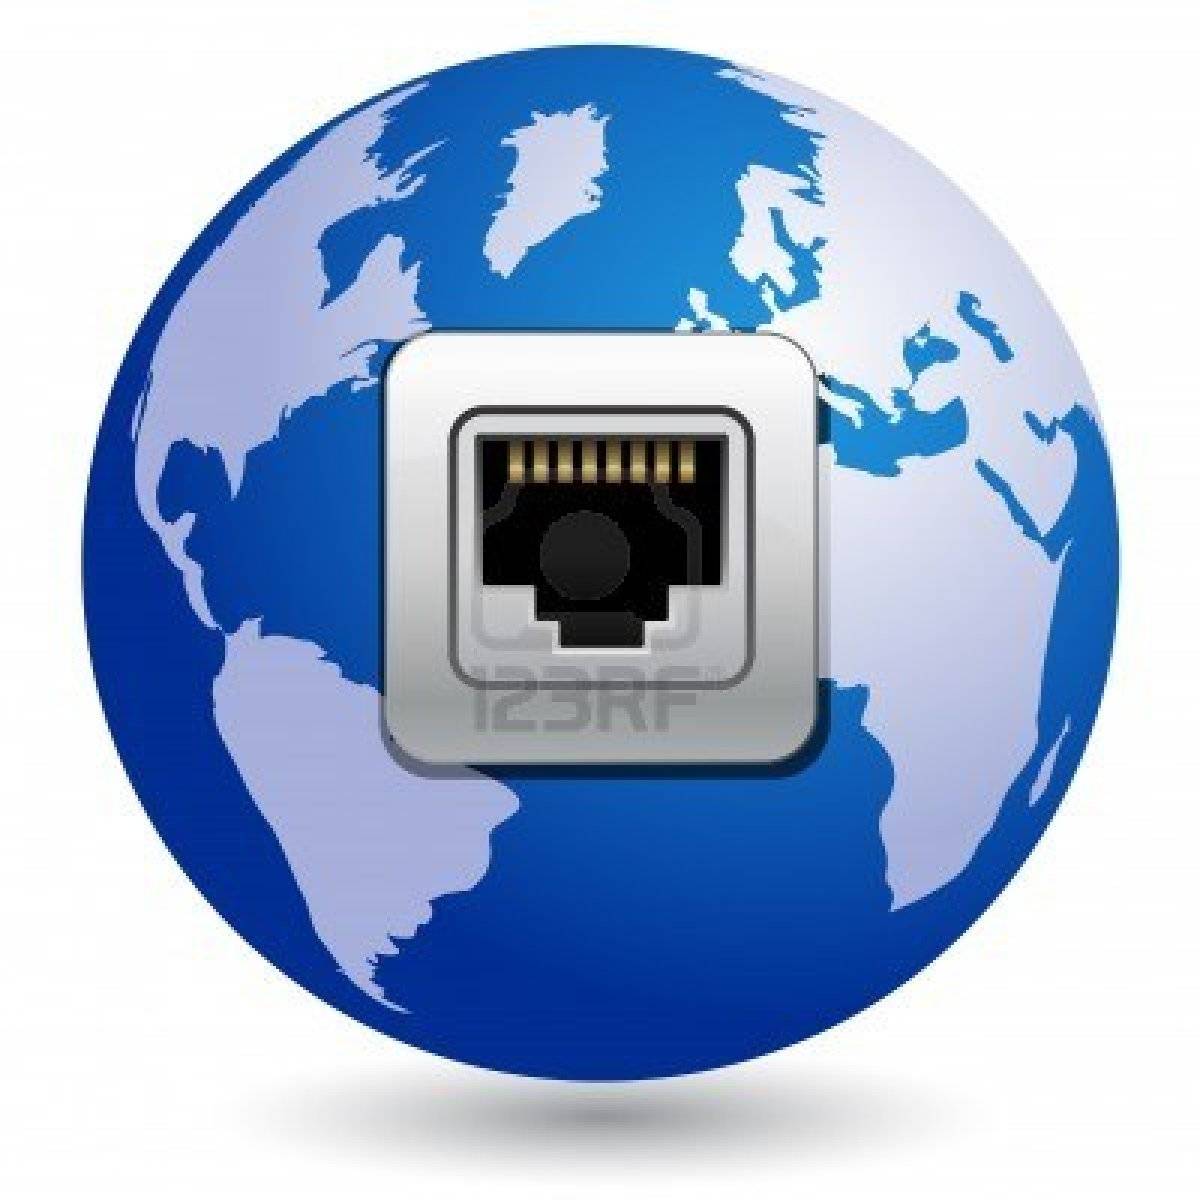 6358178-globe-with-network-socket-global-internet-communication-concept